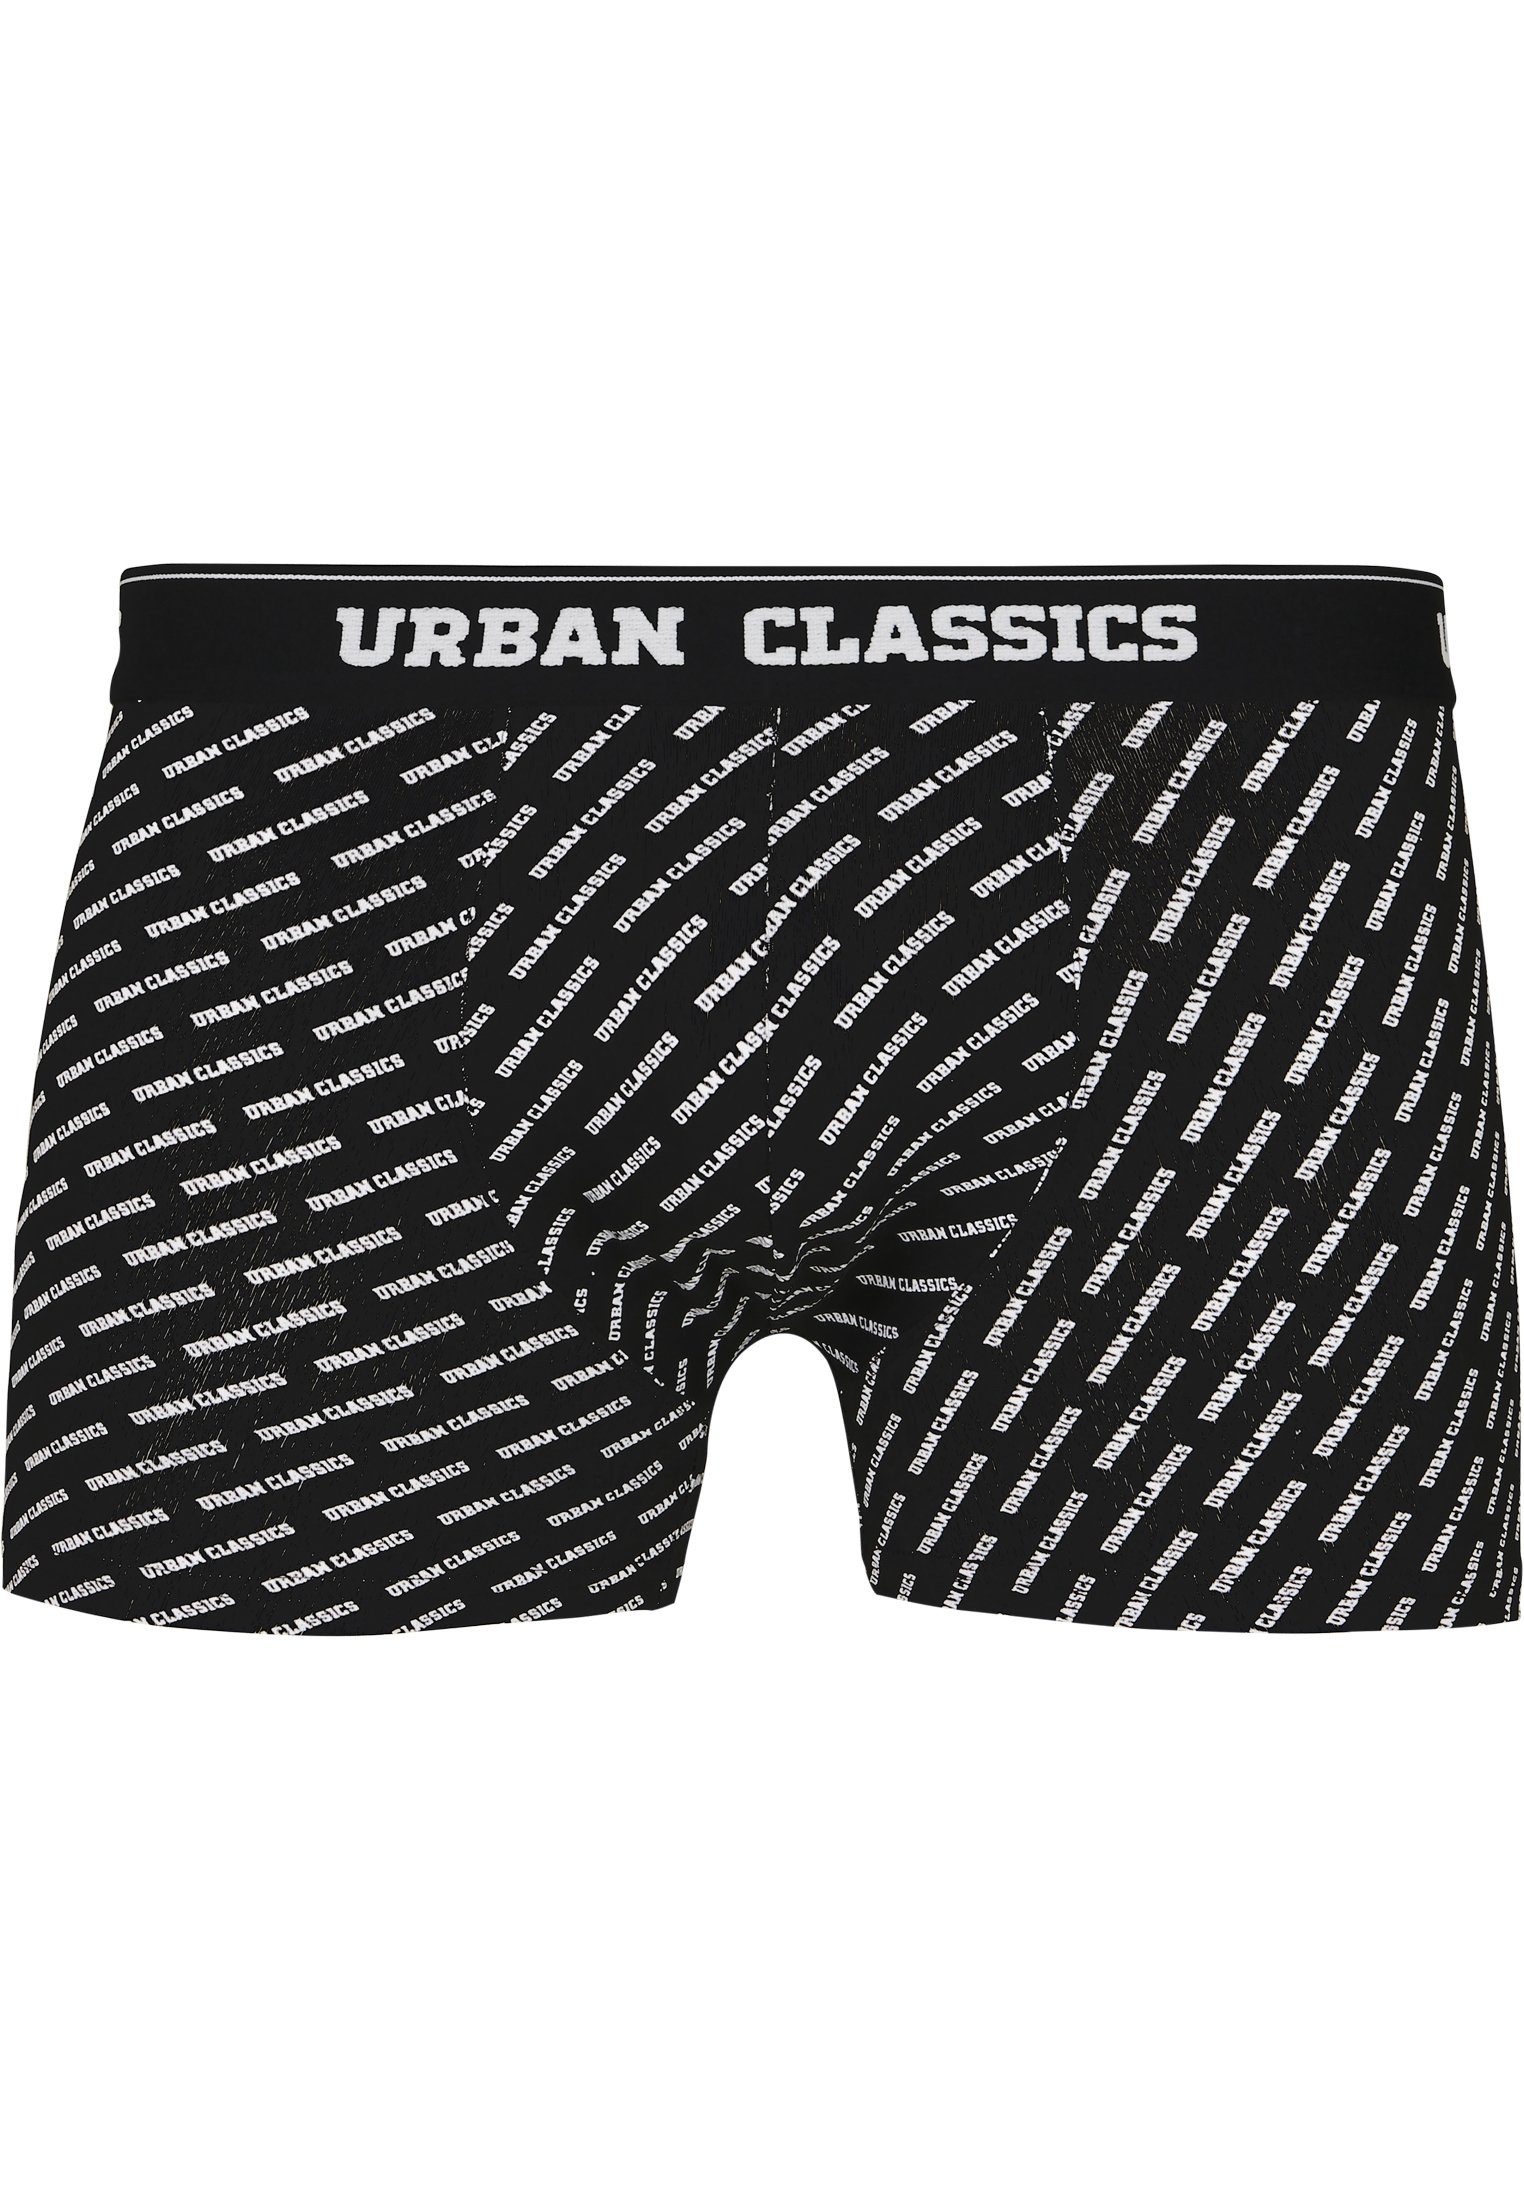 Shorts aop/black/charcoal anchor Herren Boxershorts 5-Pack CLASSICS (1-St) Boxer URBAN